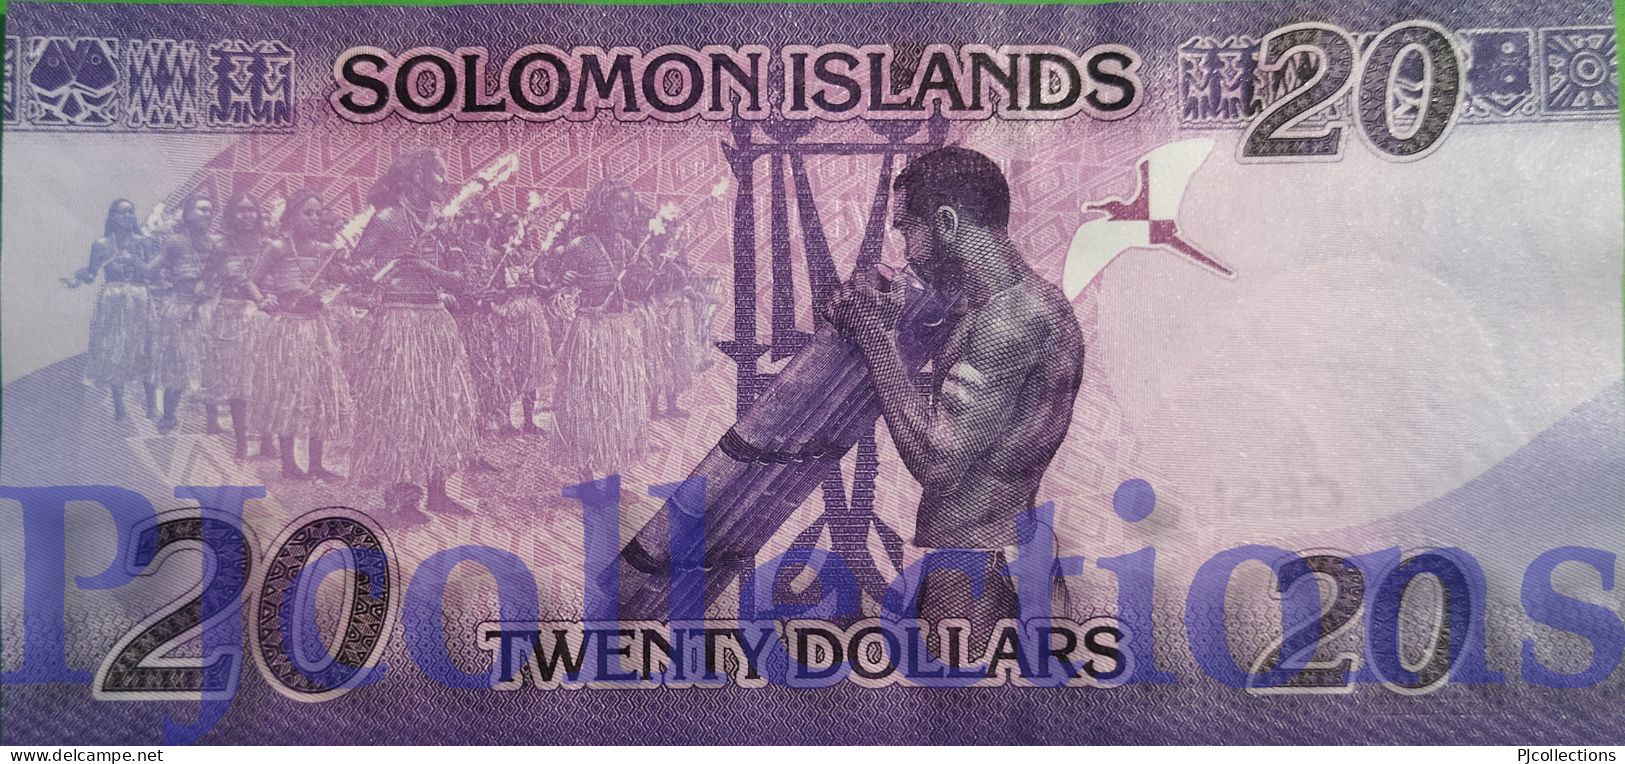 SOLOMON ISLANDS 20 DOLLARS 2017 PICK 34 UNC LOW SERIAL NUMBER "A/1 000766" - Salomonseilanden